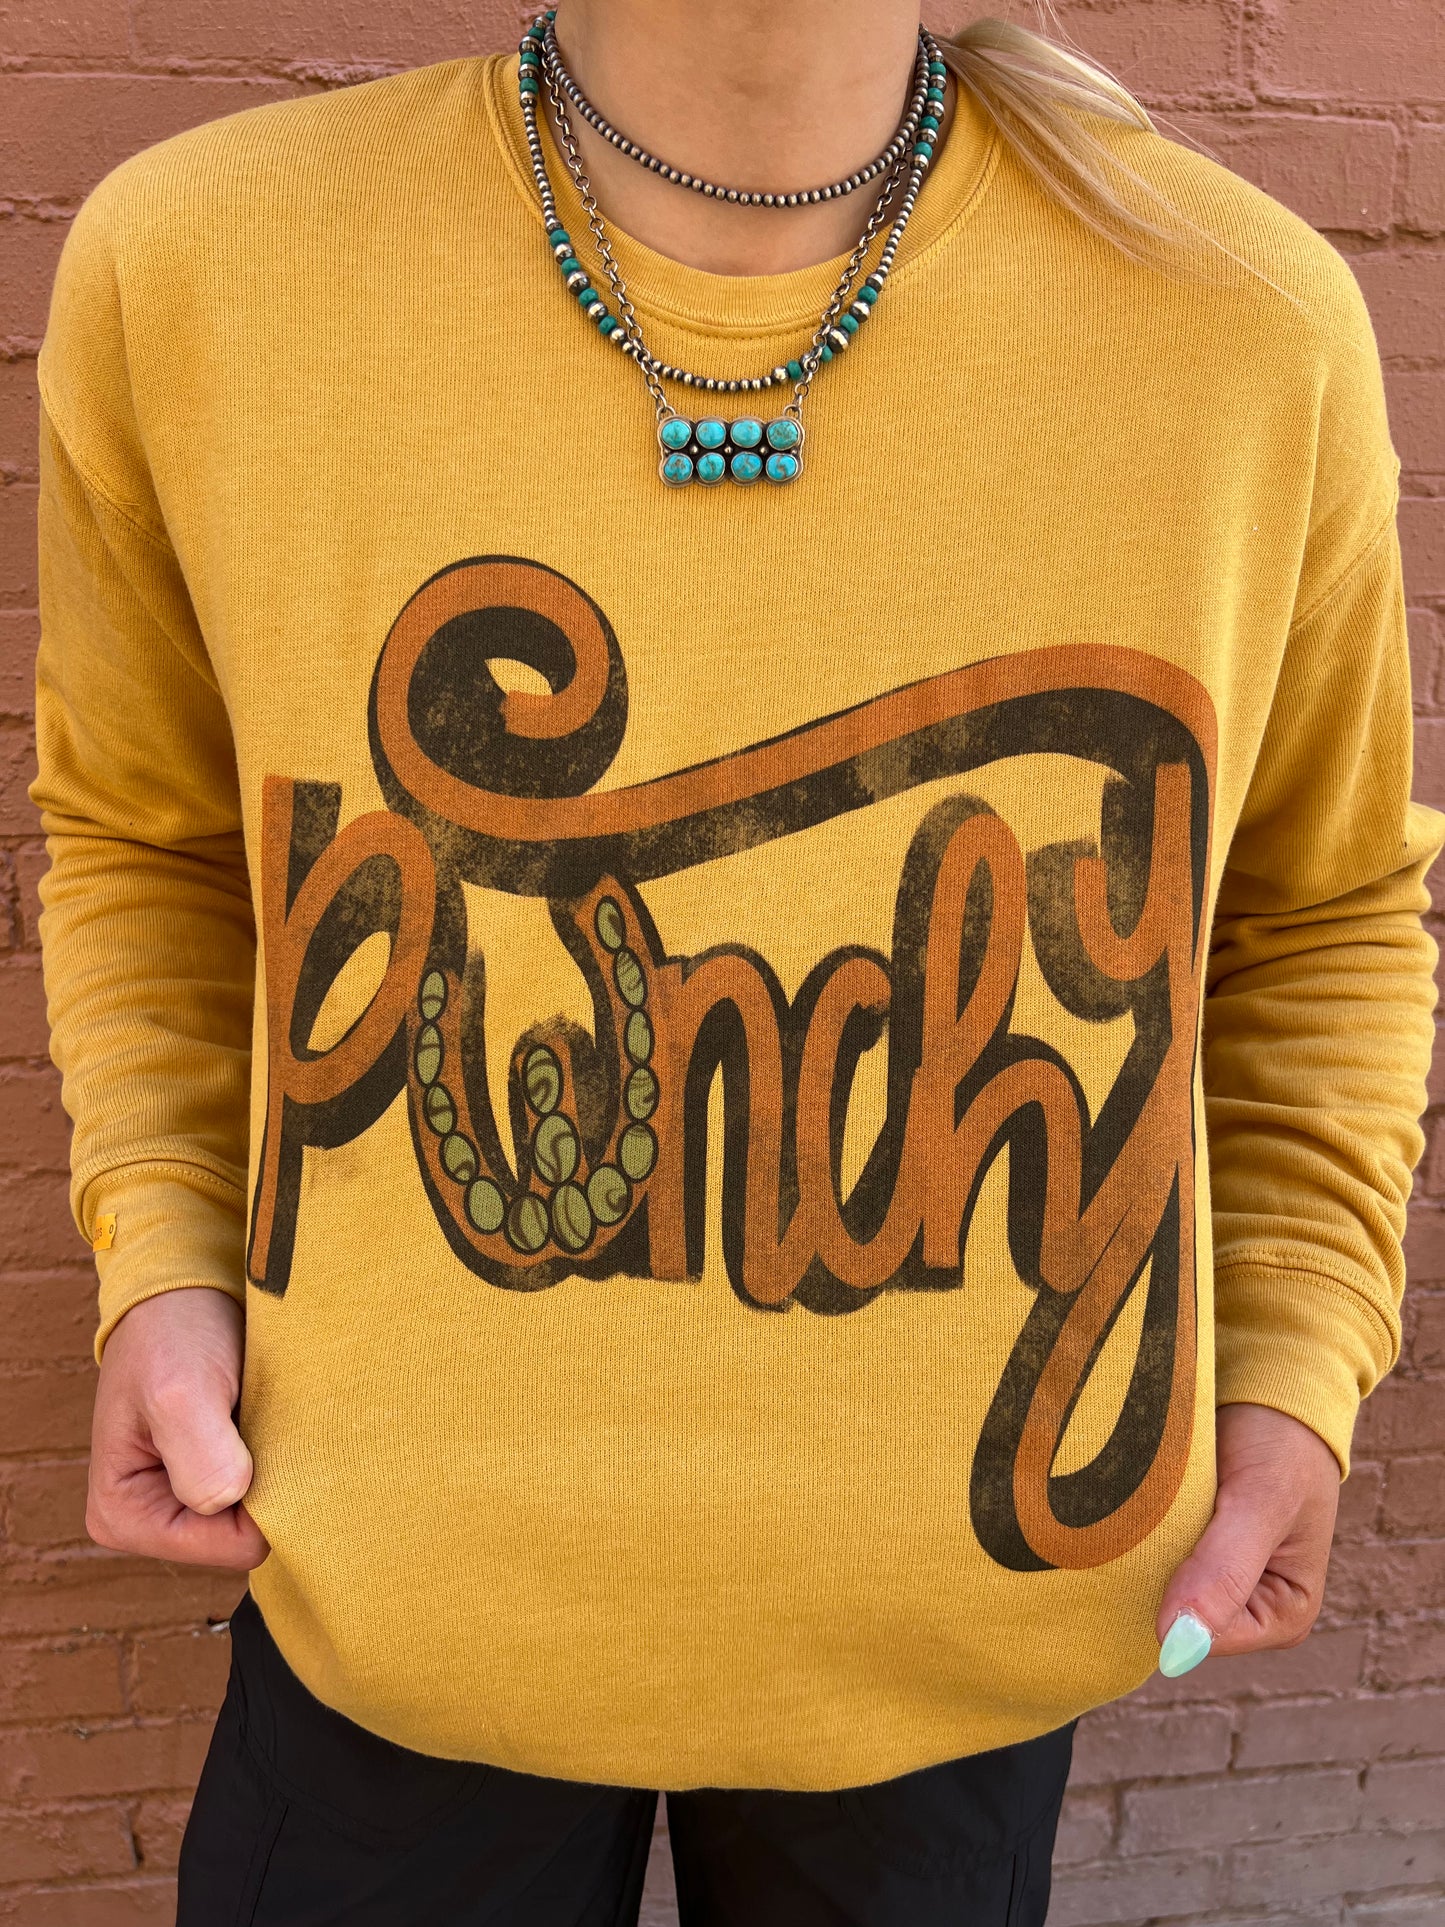 The Punchy Graphic Sweatshirt